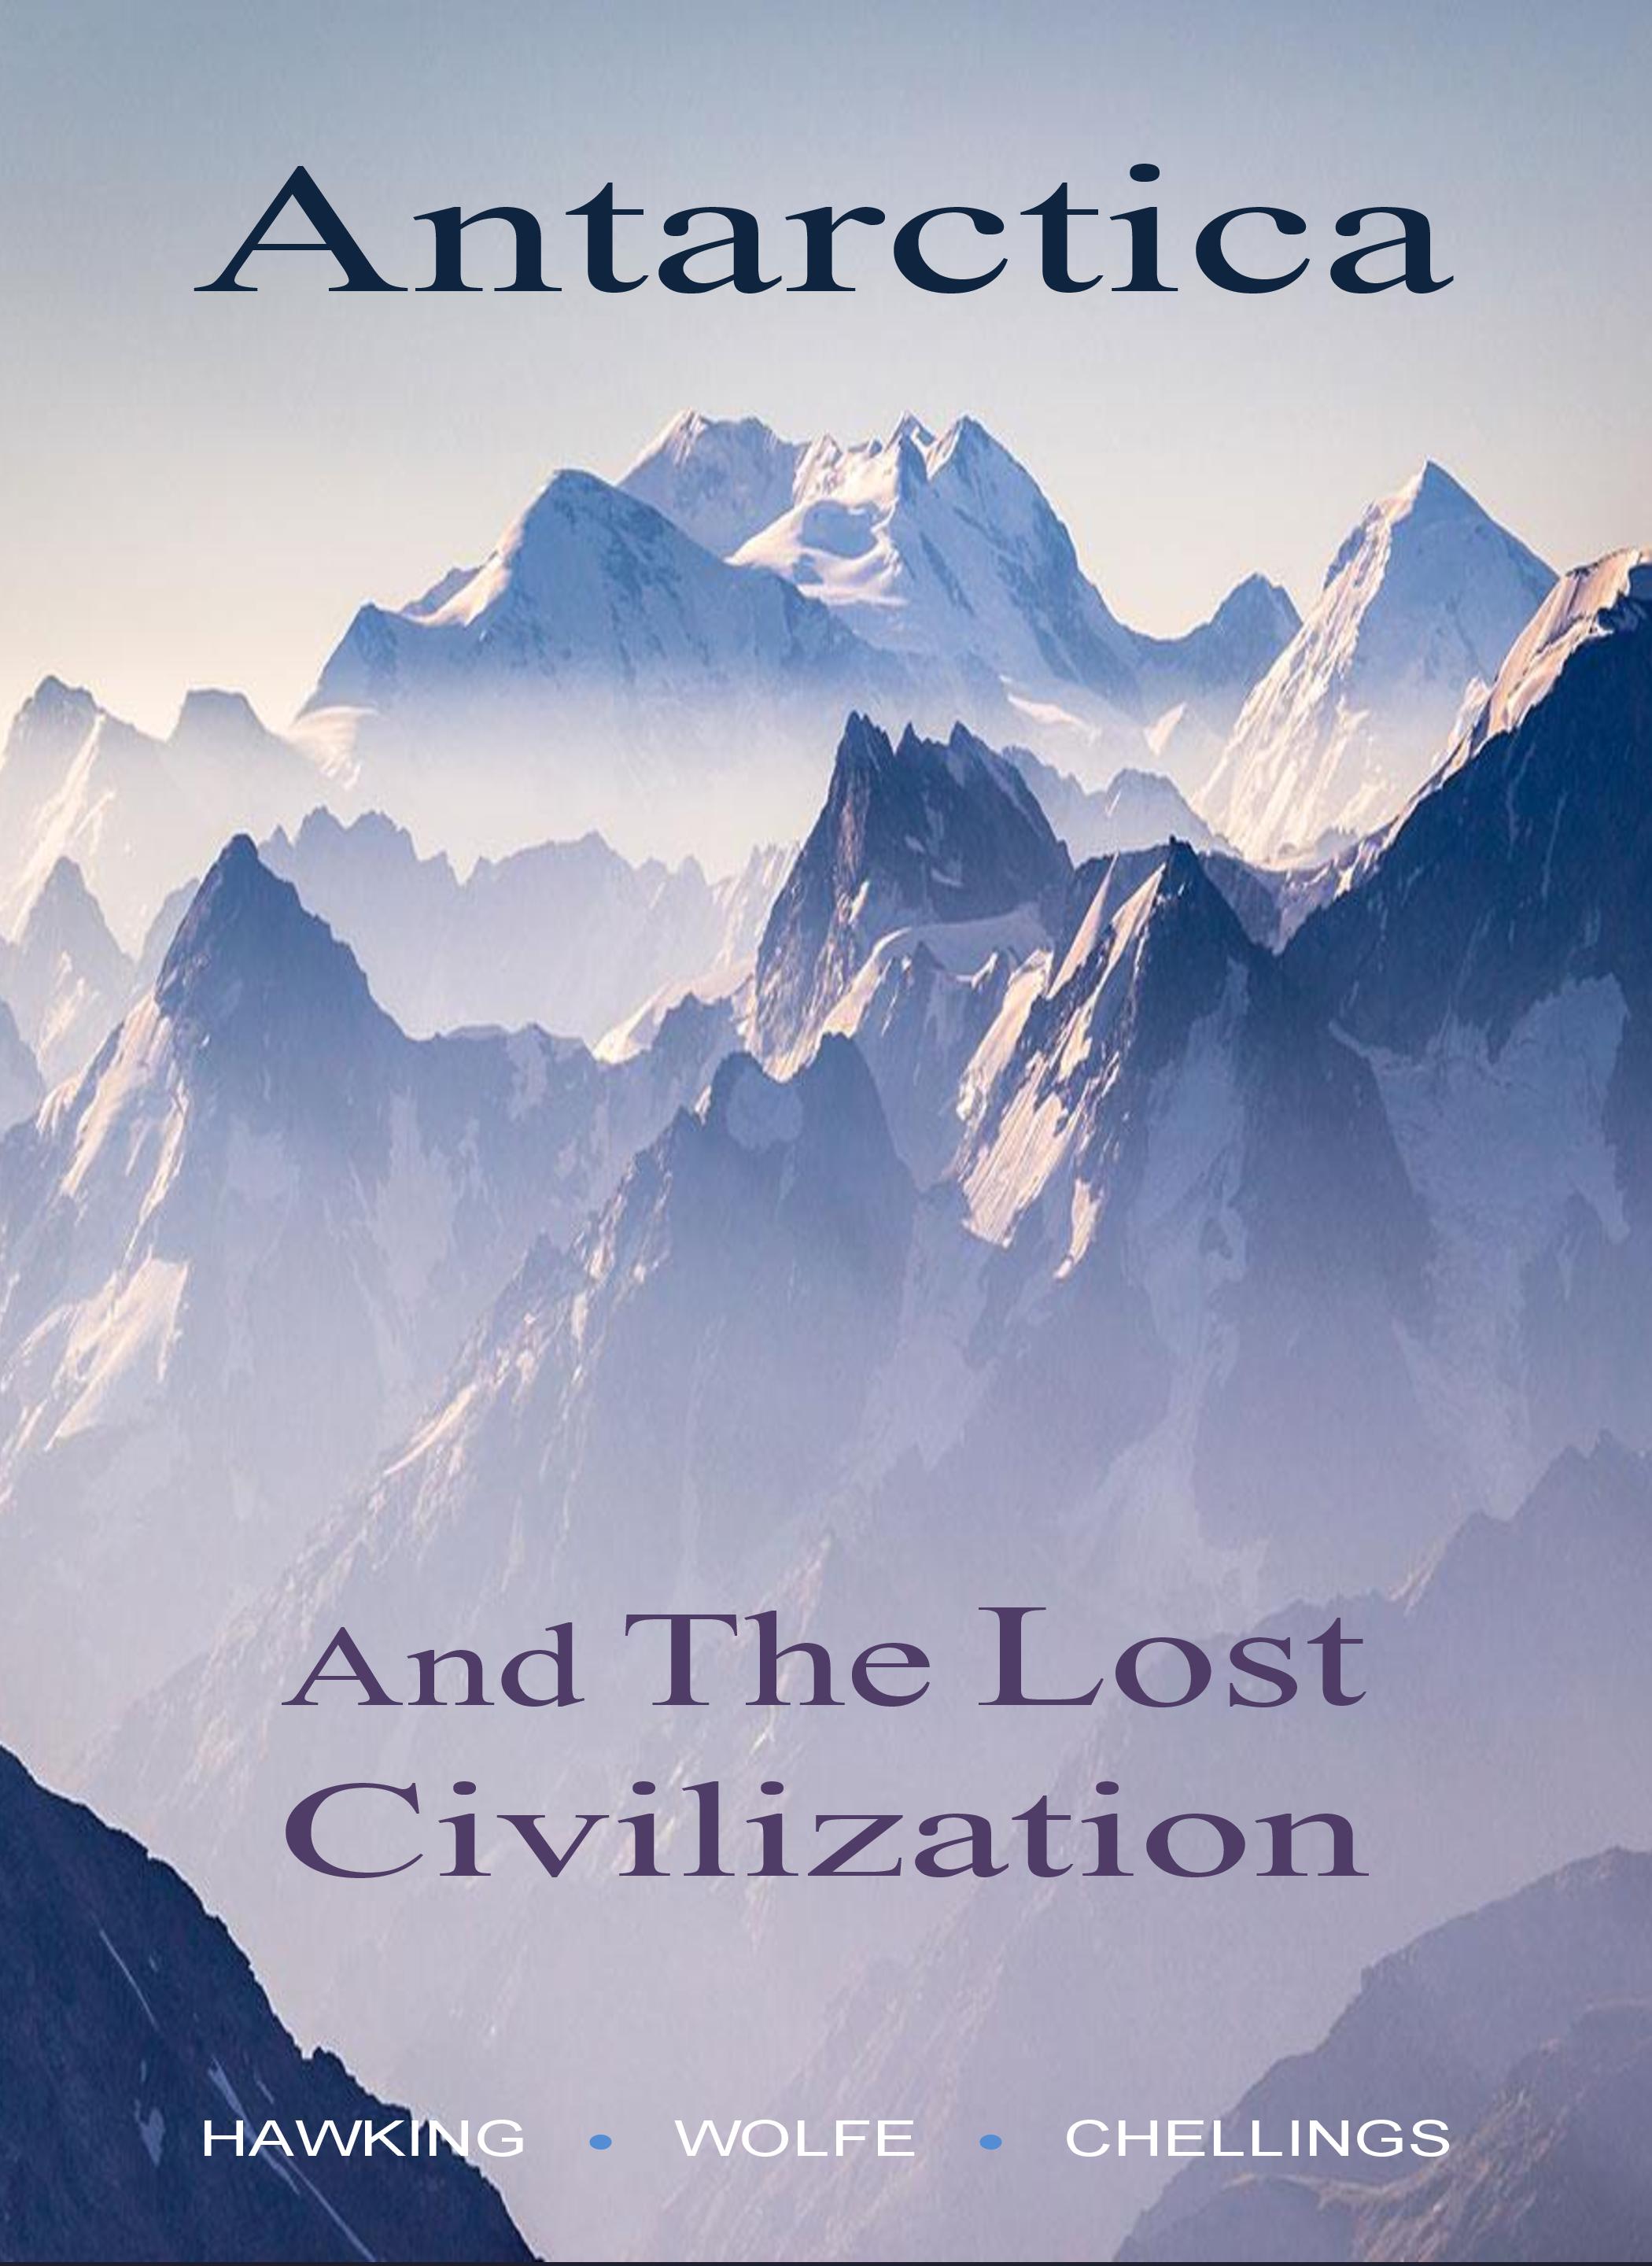 Antarctica and The Lost Civilizationbook cover